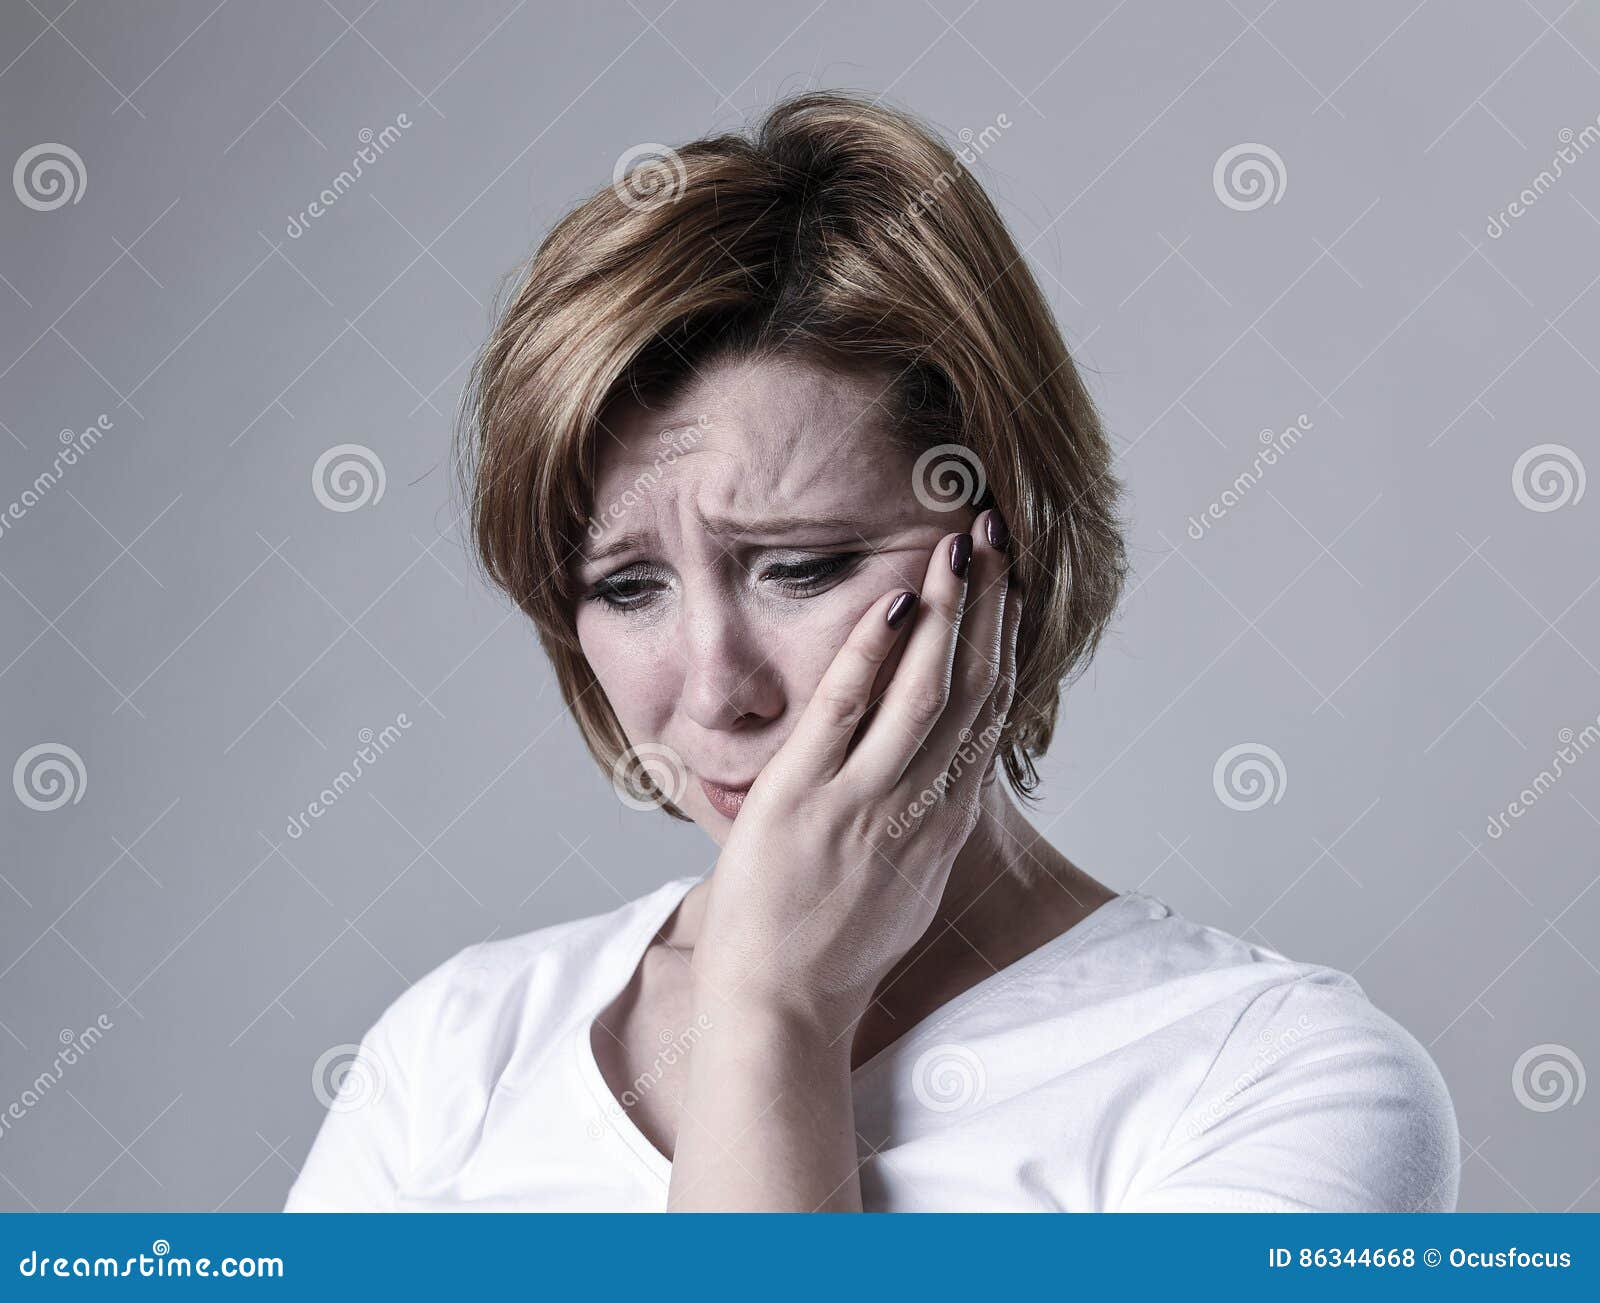 Devastated Depressed Woman Crying Sad Feeling Hurt Suffering ...